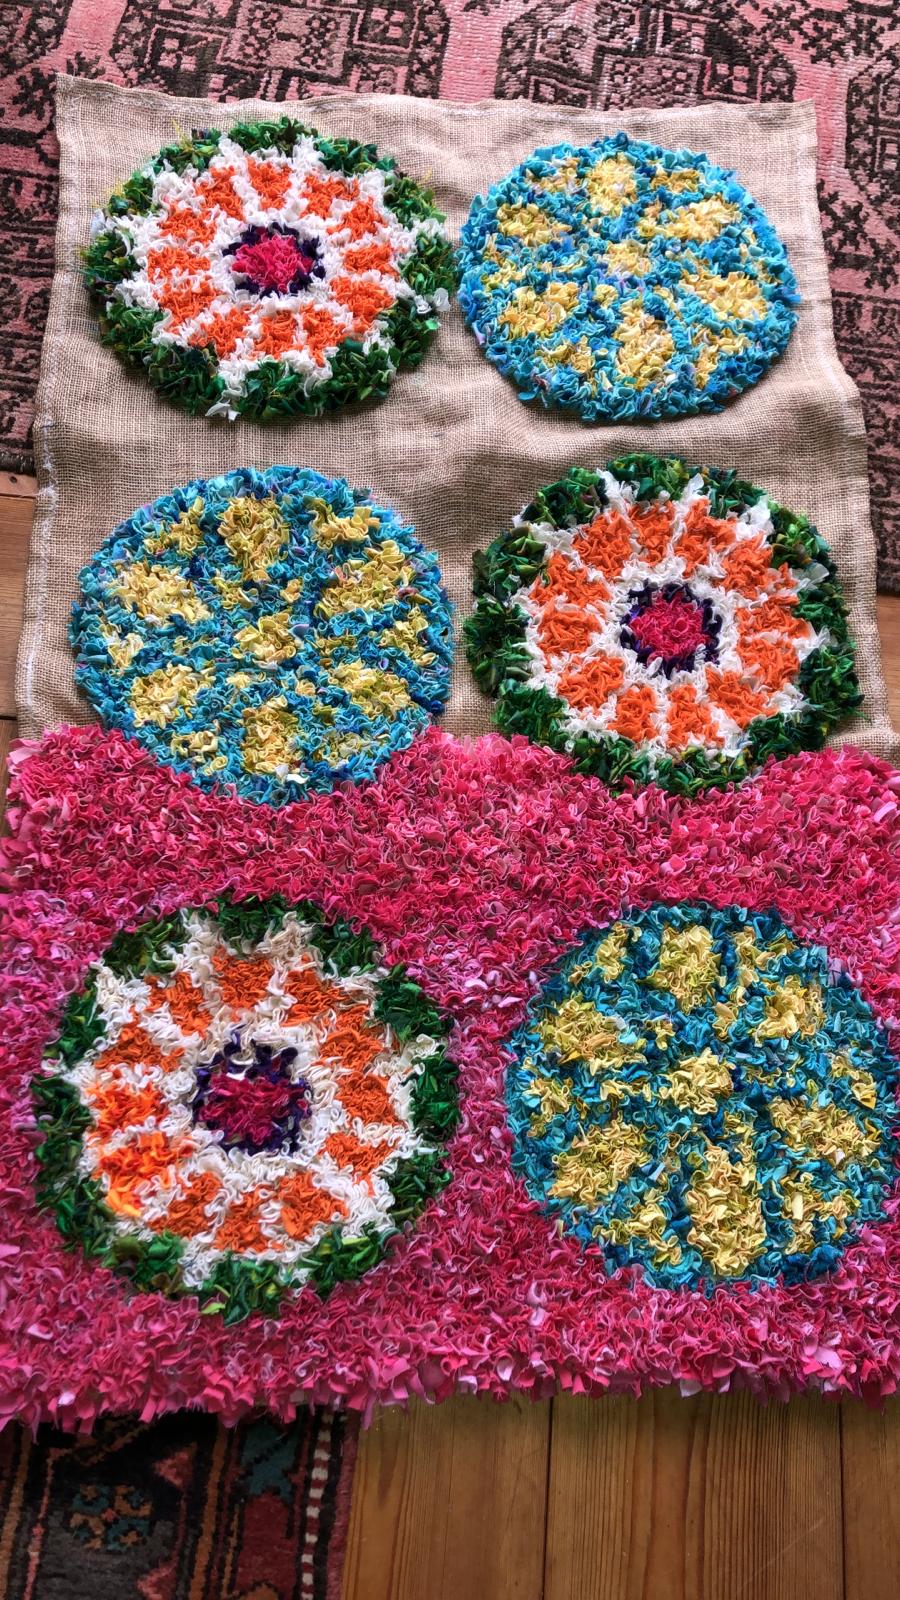 Work in progress half finished pink rag rug with circular geometric design